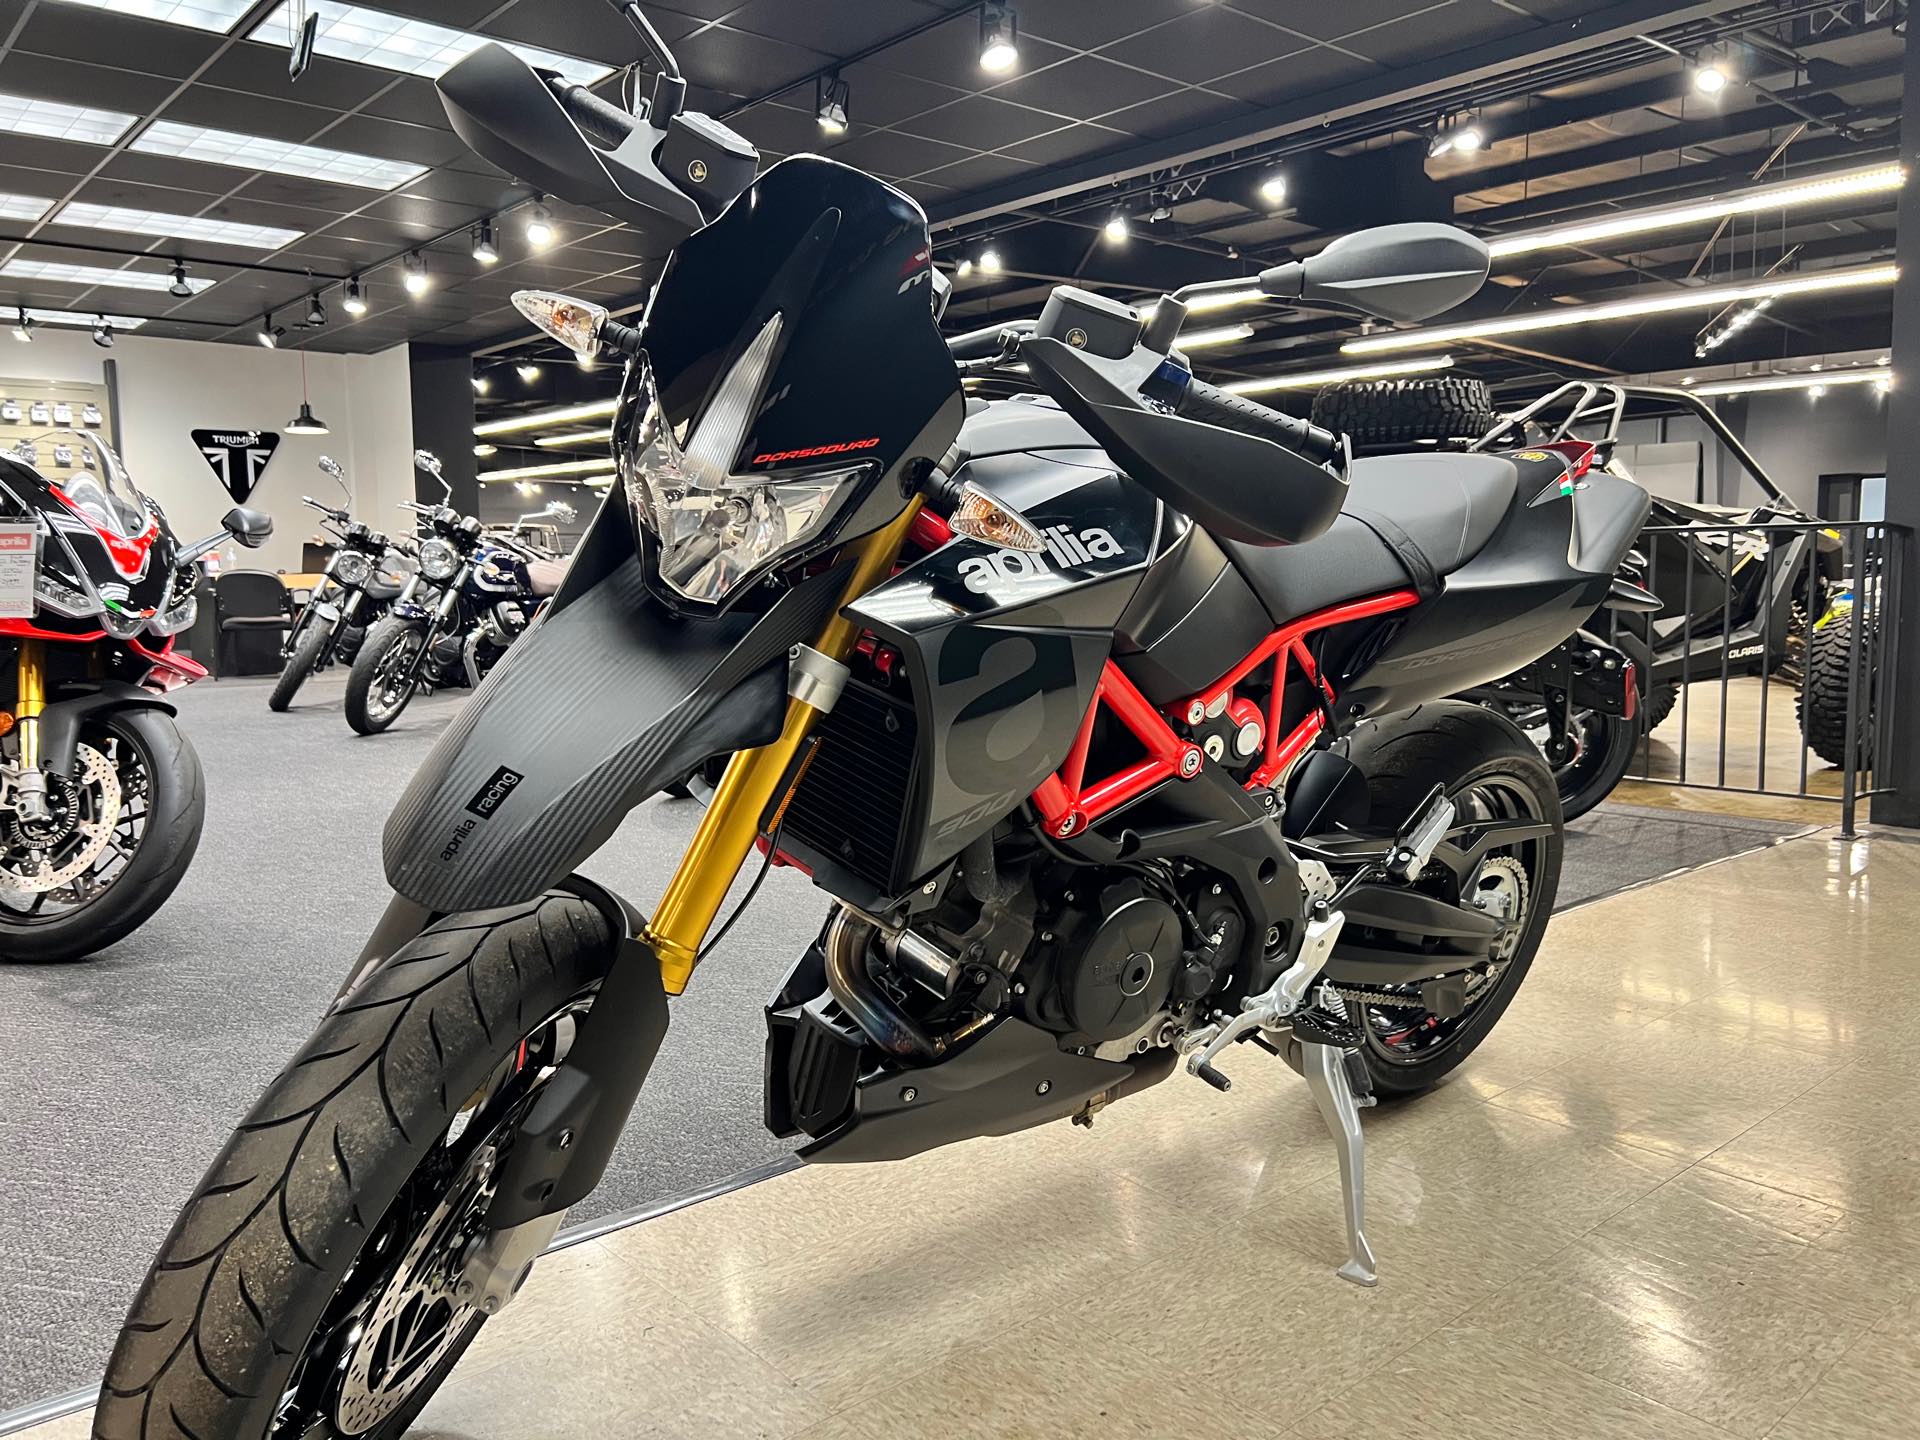 2020 Aprilia Dorsoduro 900 at Sloans Motorcycle ATV, Murfreesboro, TN, 37129